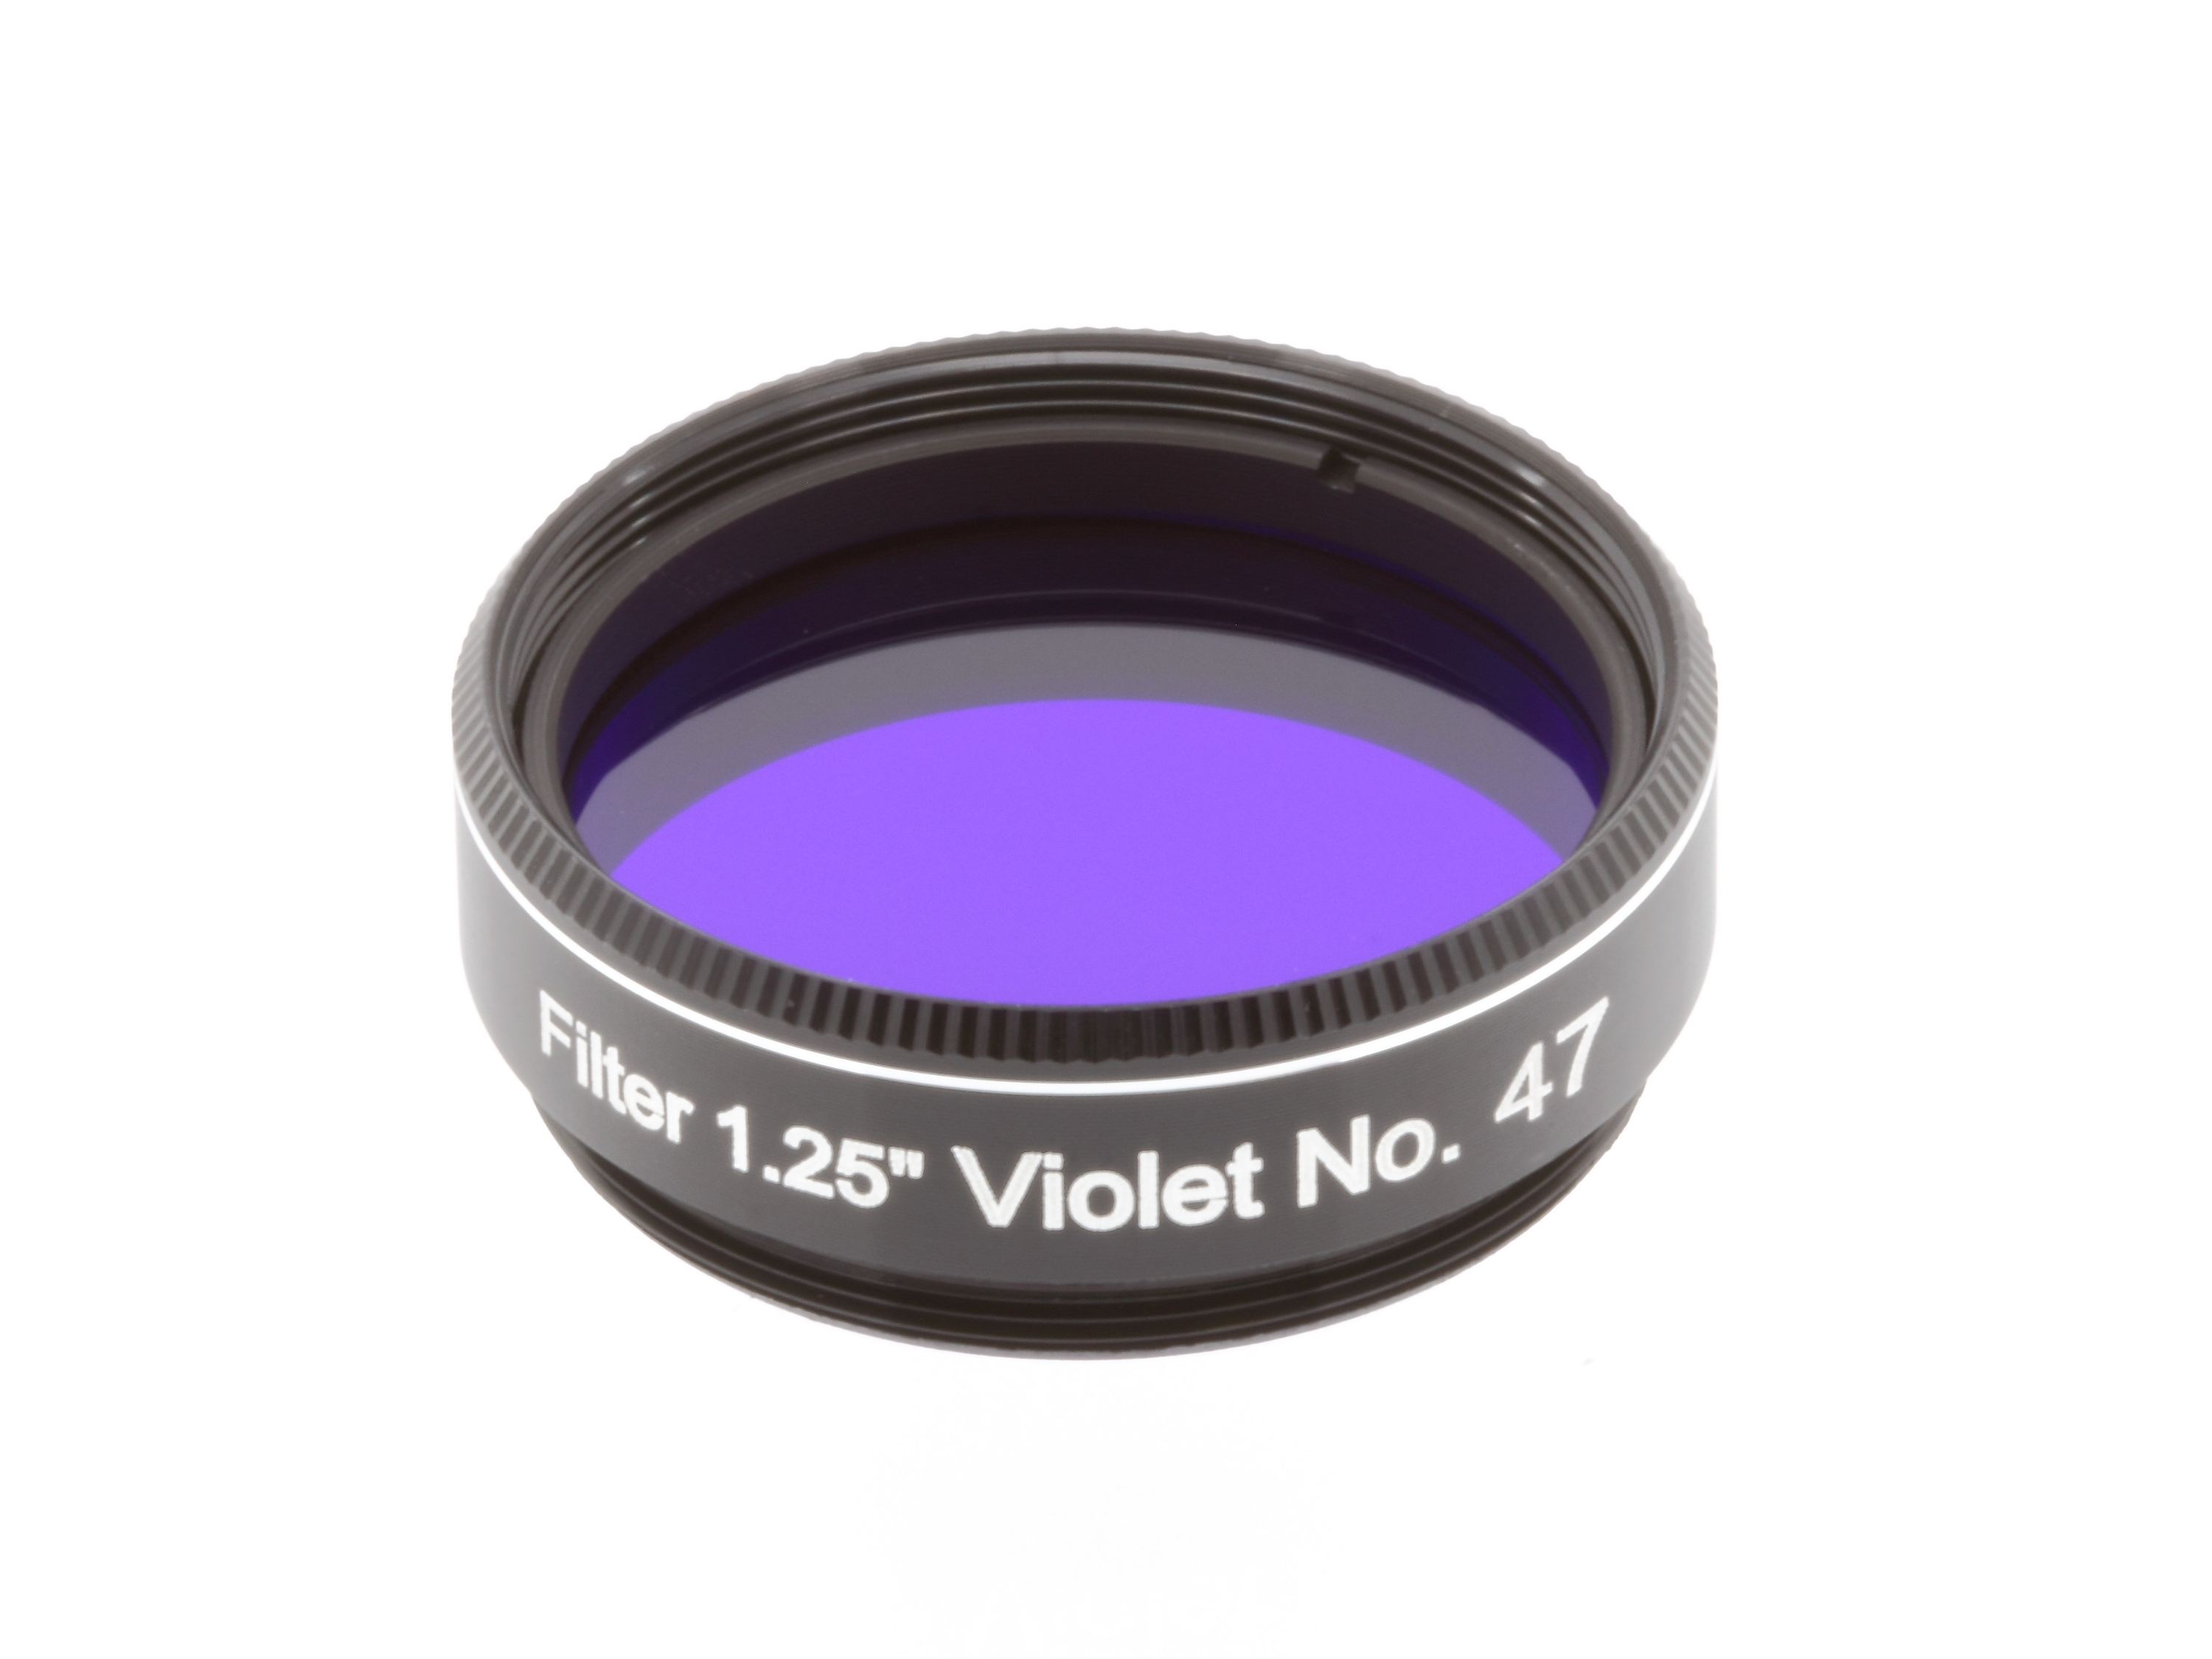 EXPLORE SCIENTIFIC Filtro 1.25" violeta nr. 47